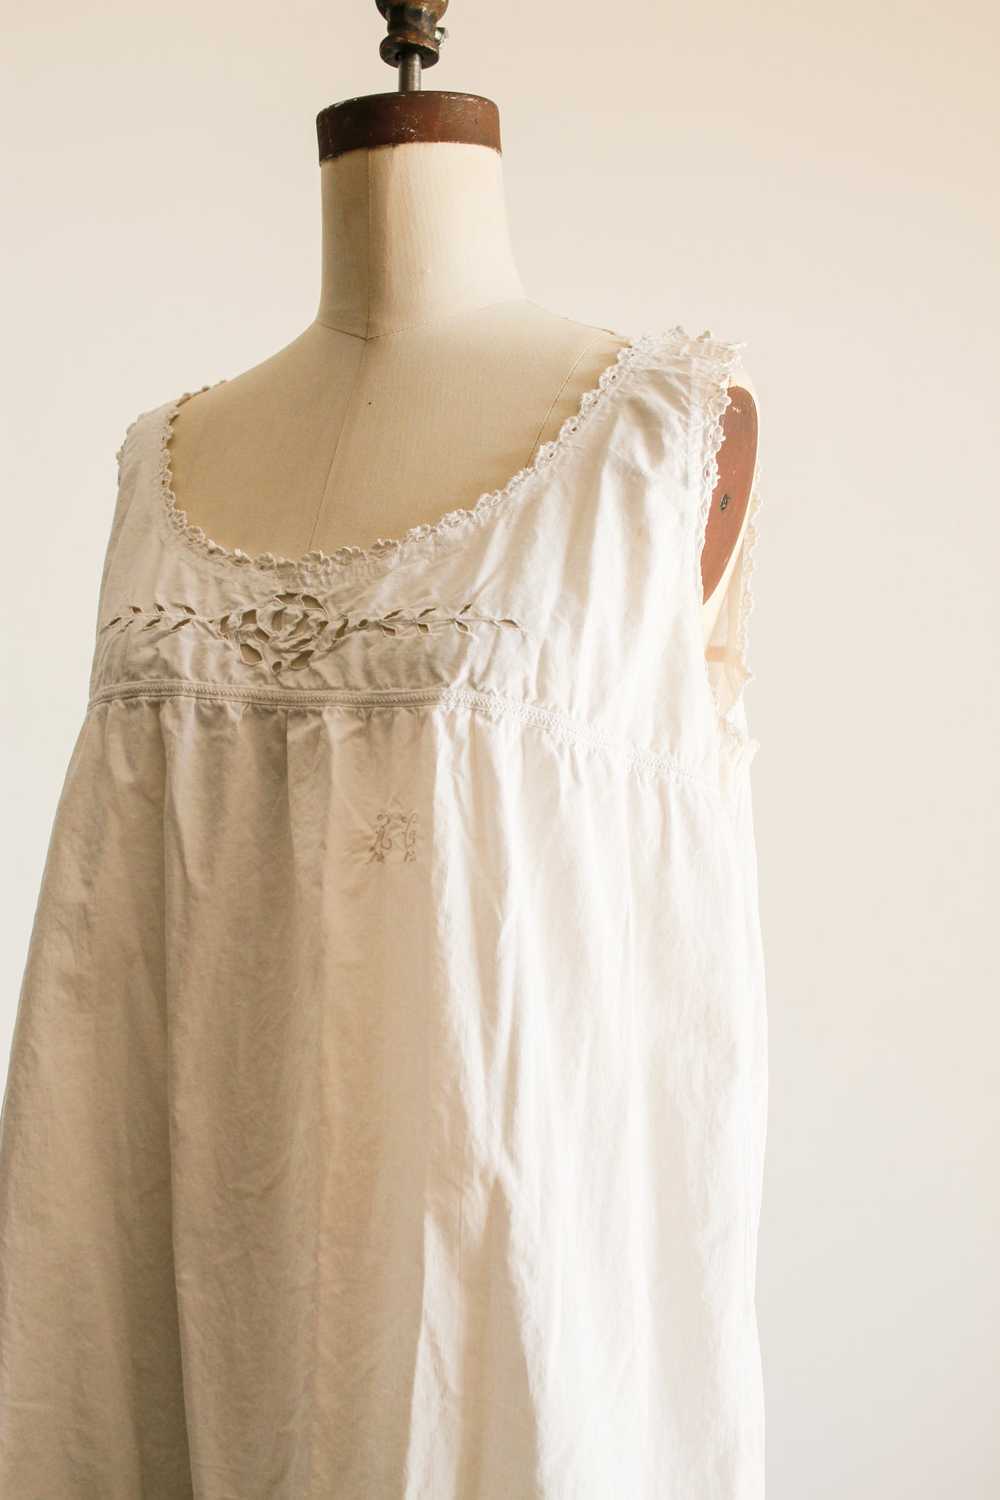 Victorian White Cotton Rosette Night Dress - image 2